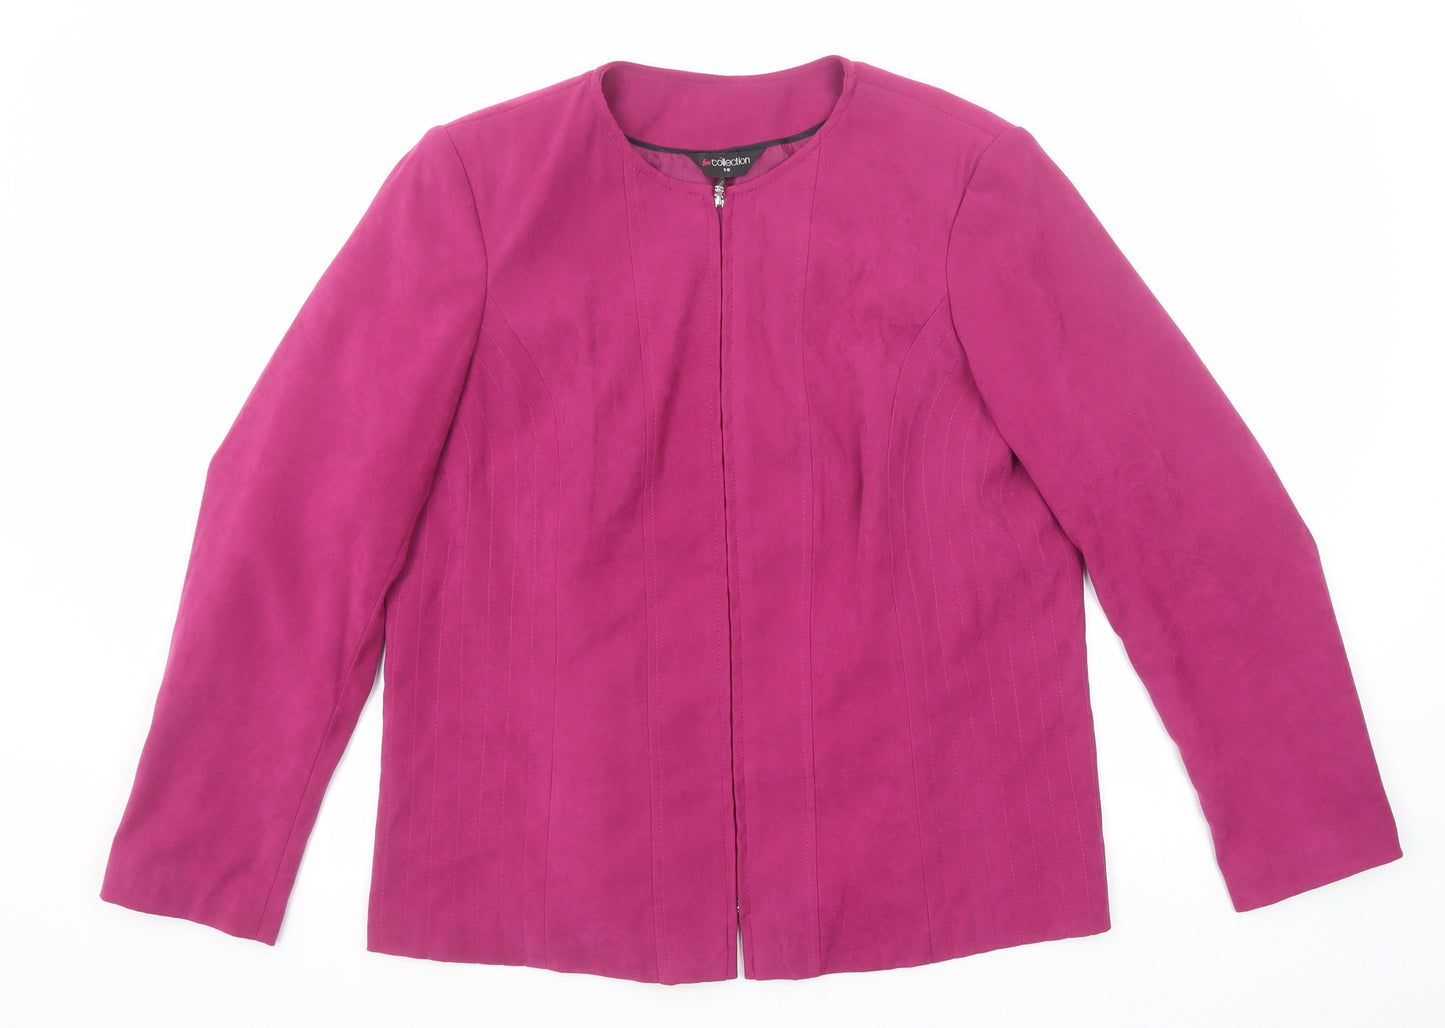 Bonmarché Womens Pink Jacket Size 18 Zip